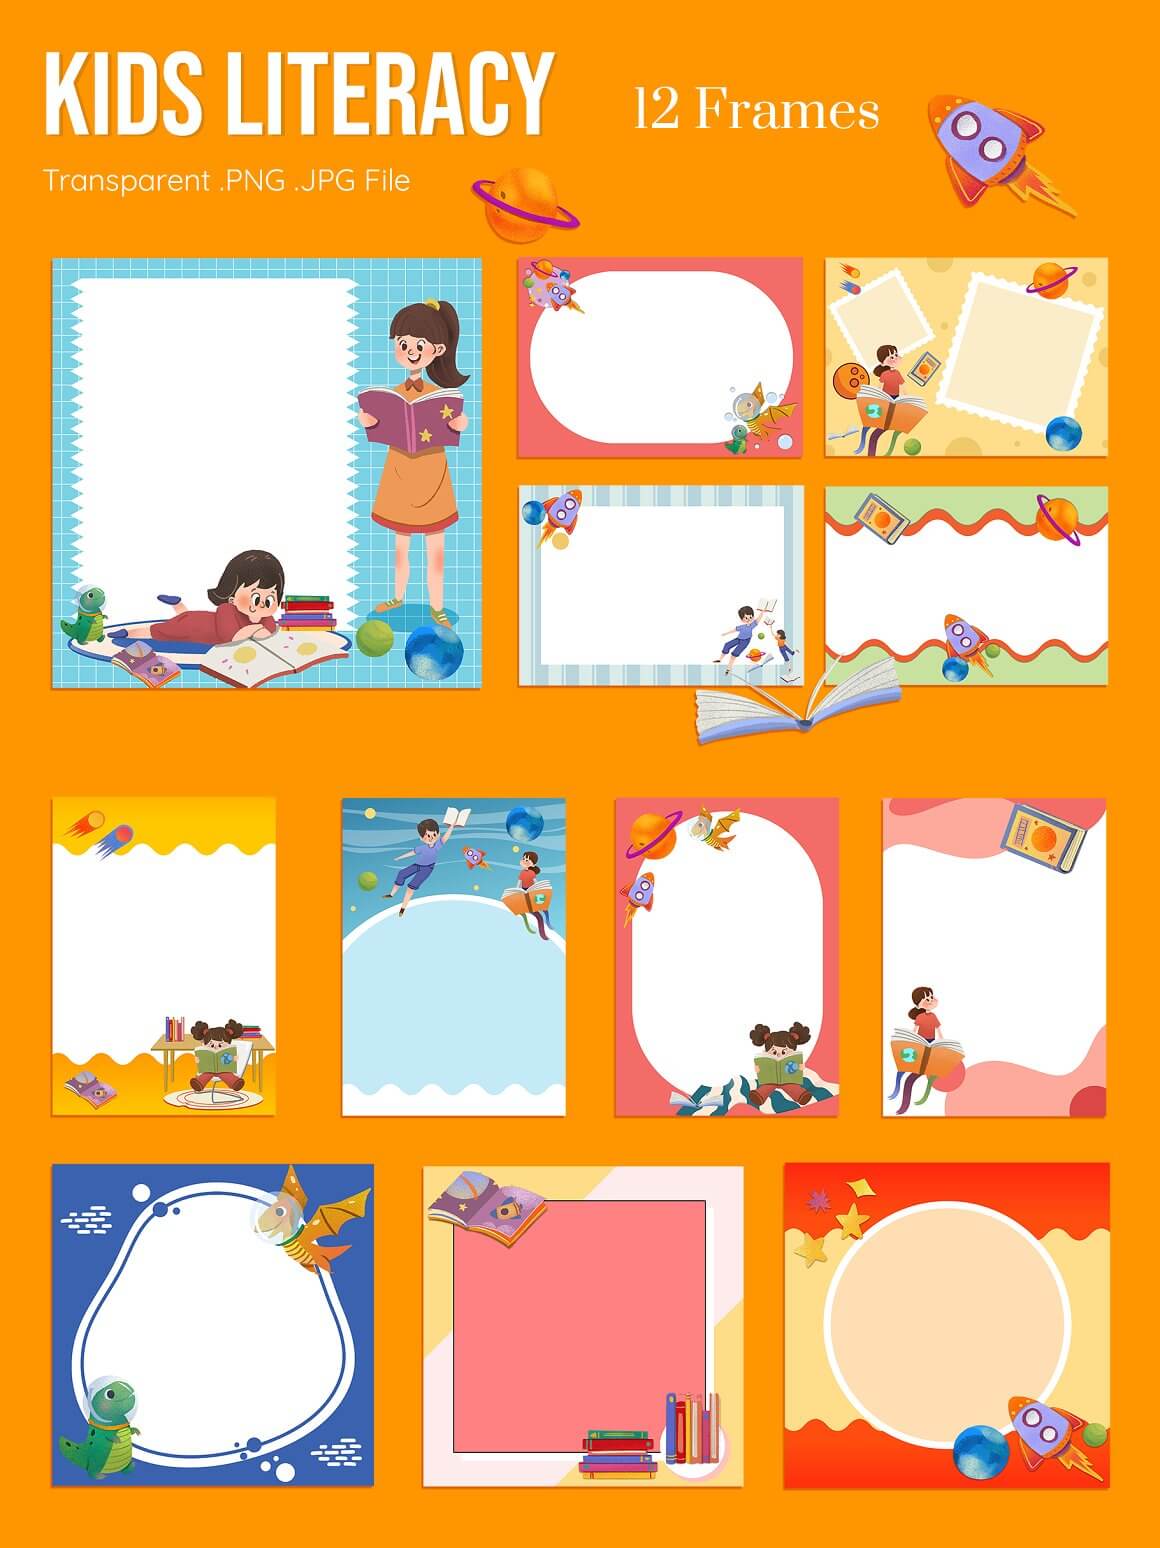 12 frames of kids literacy in various colors.